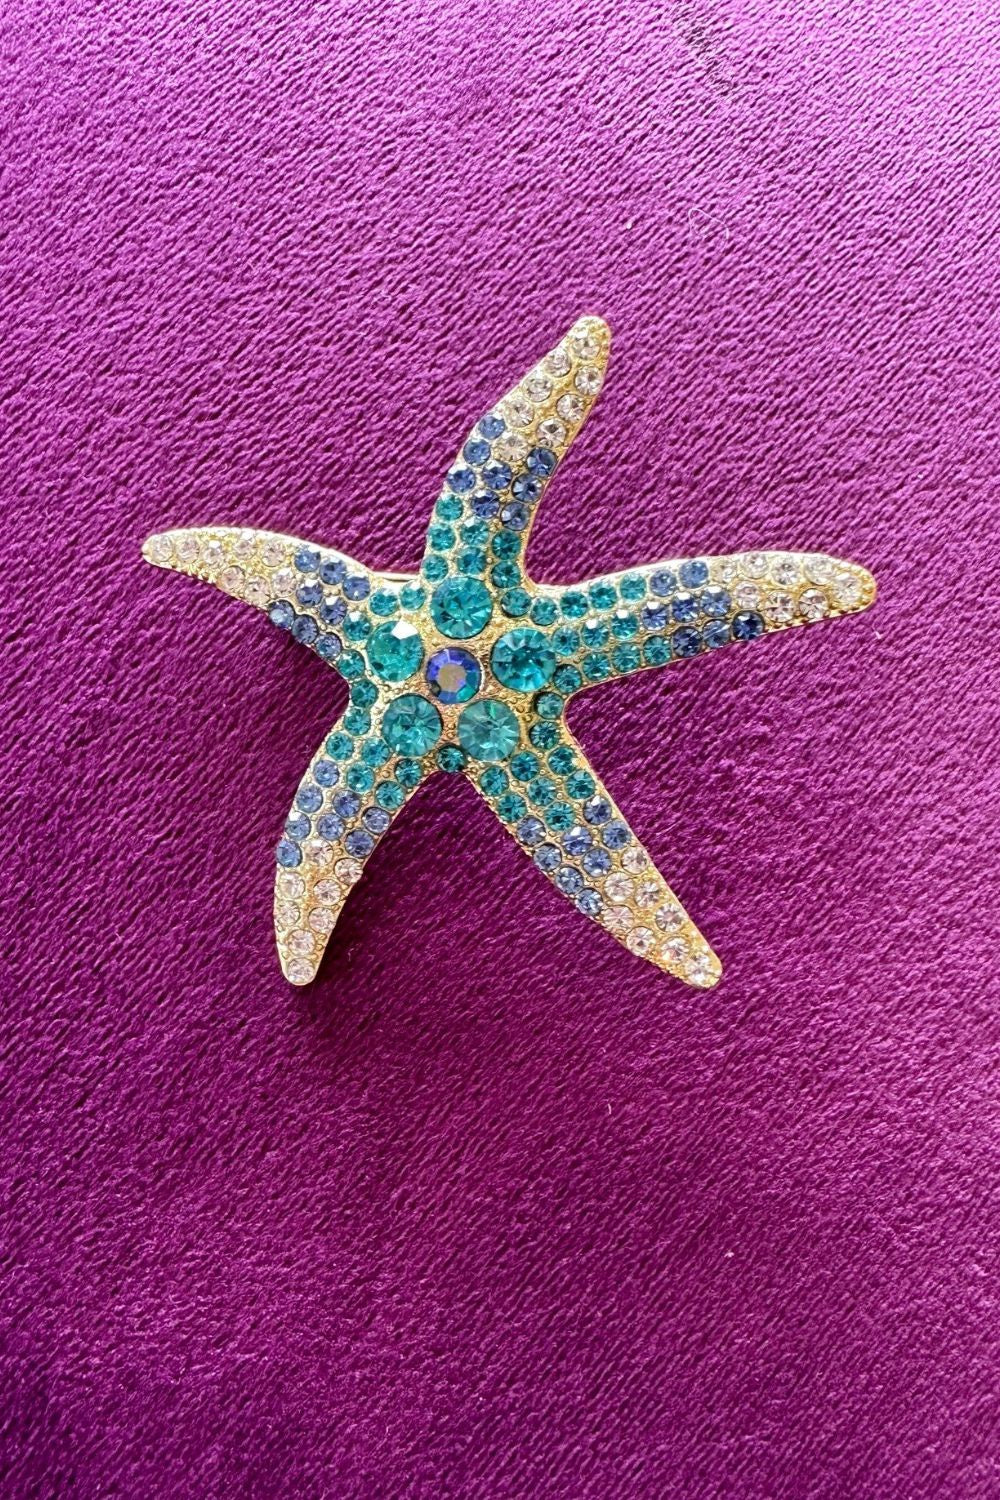 Sally Starfish Brooch